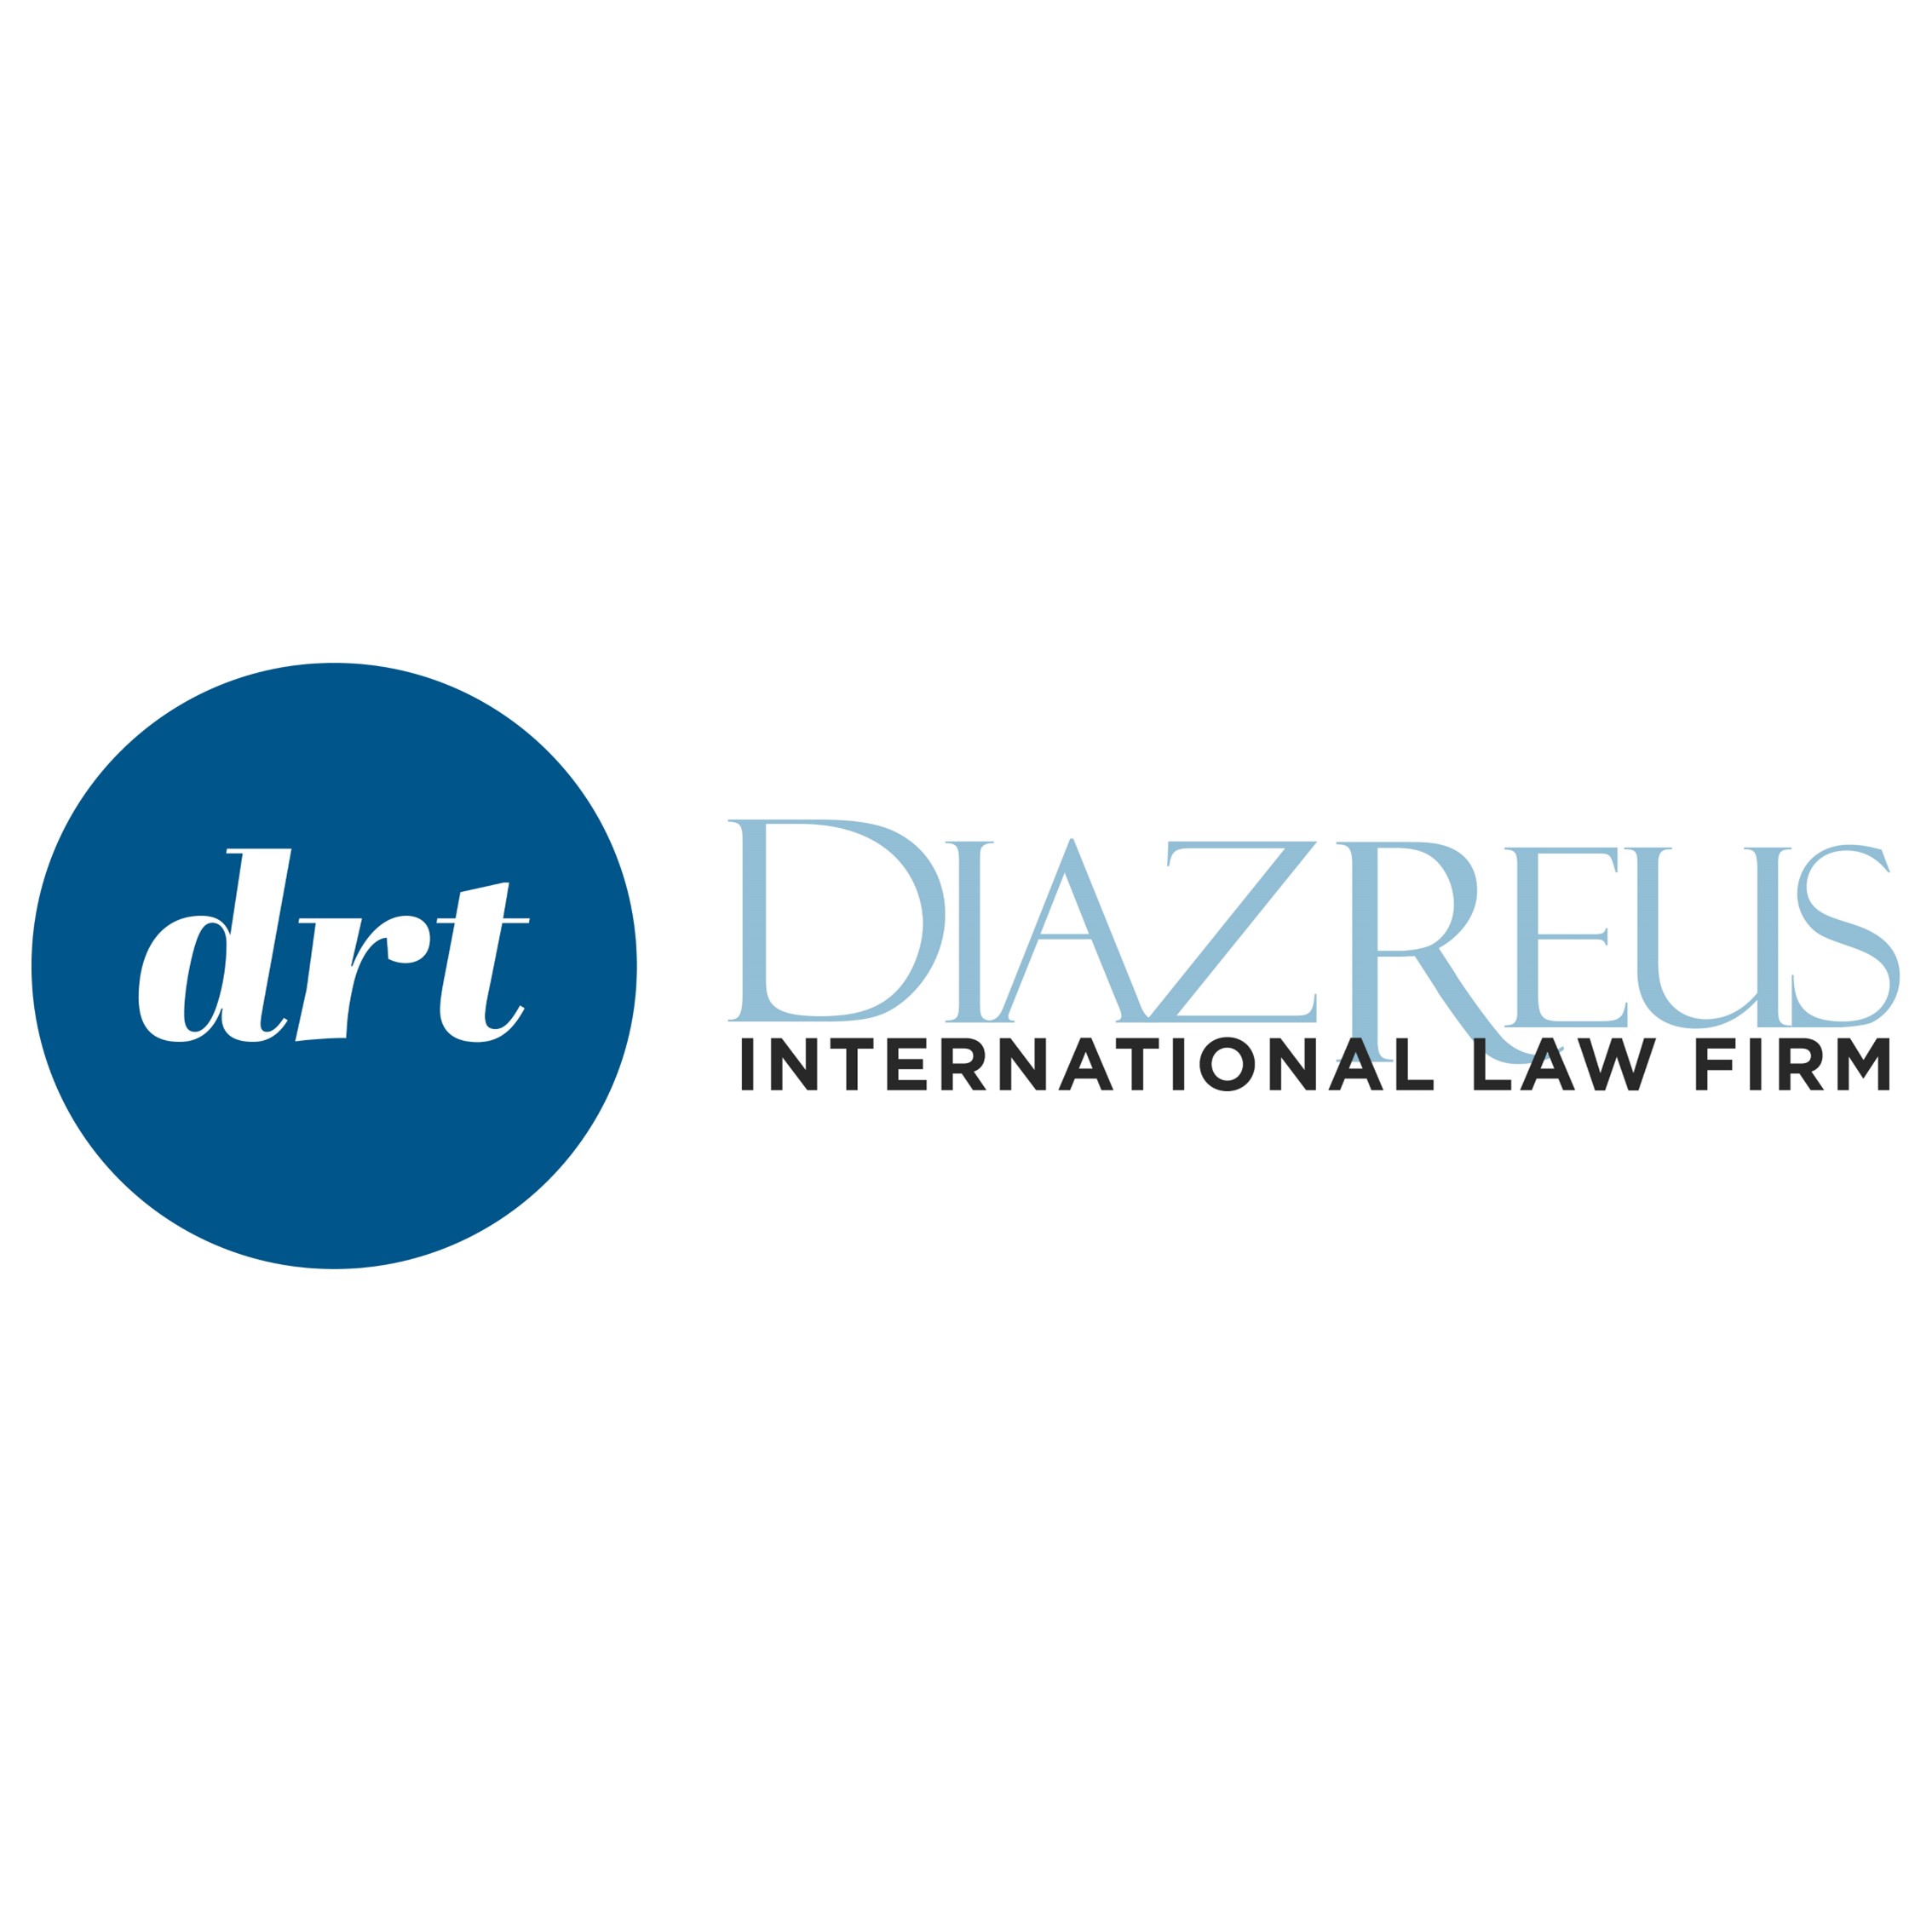 Diaz Reus International Law Firm